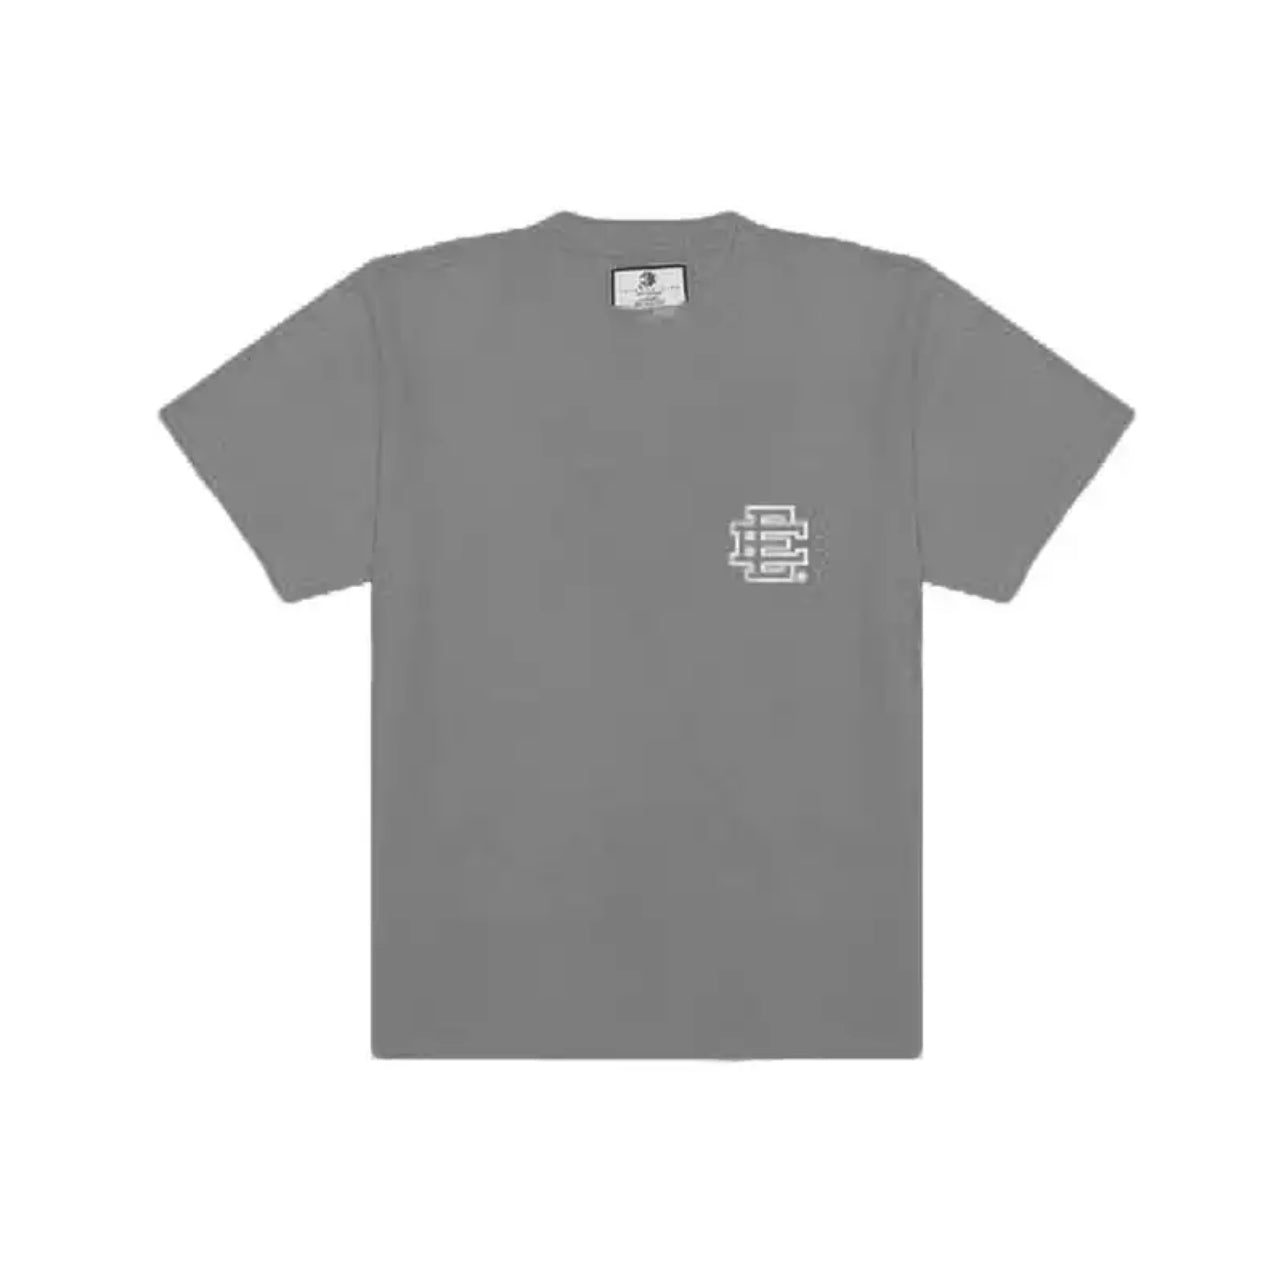 ee-shirt grn 5k